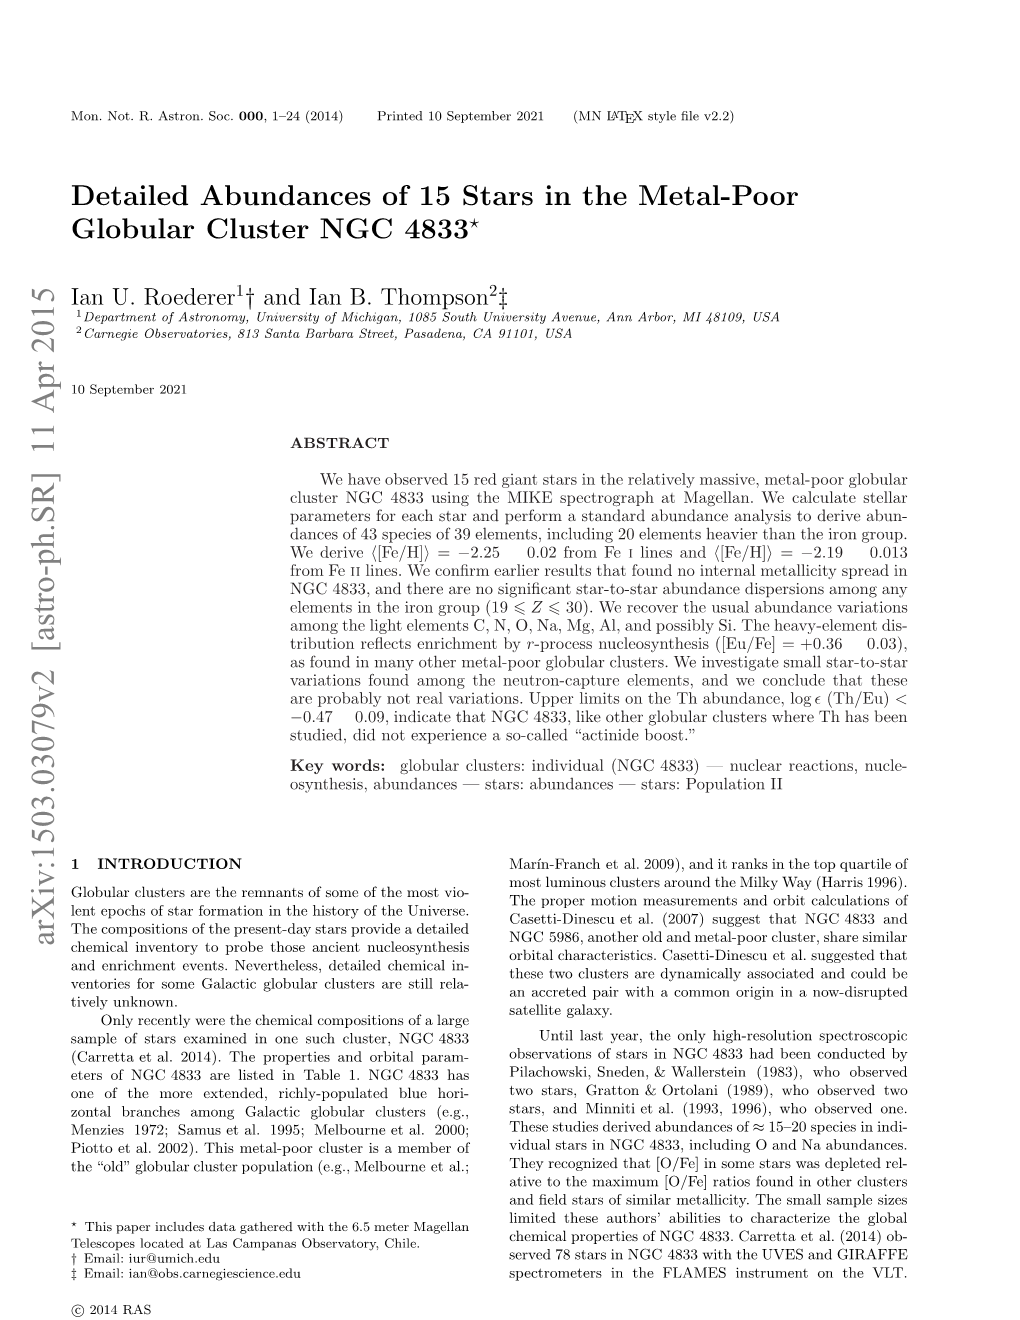 Detailed Abundances of 15 Stars in the Metal-Poor Globular Cluster NGC 4833